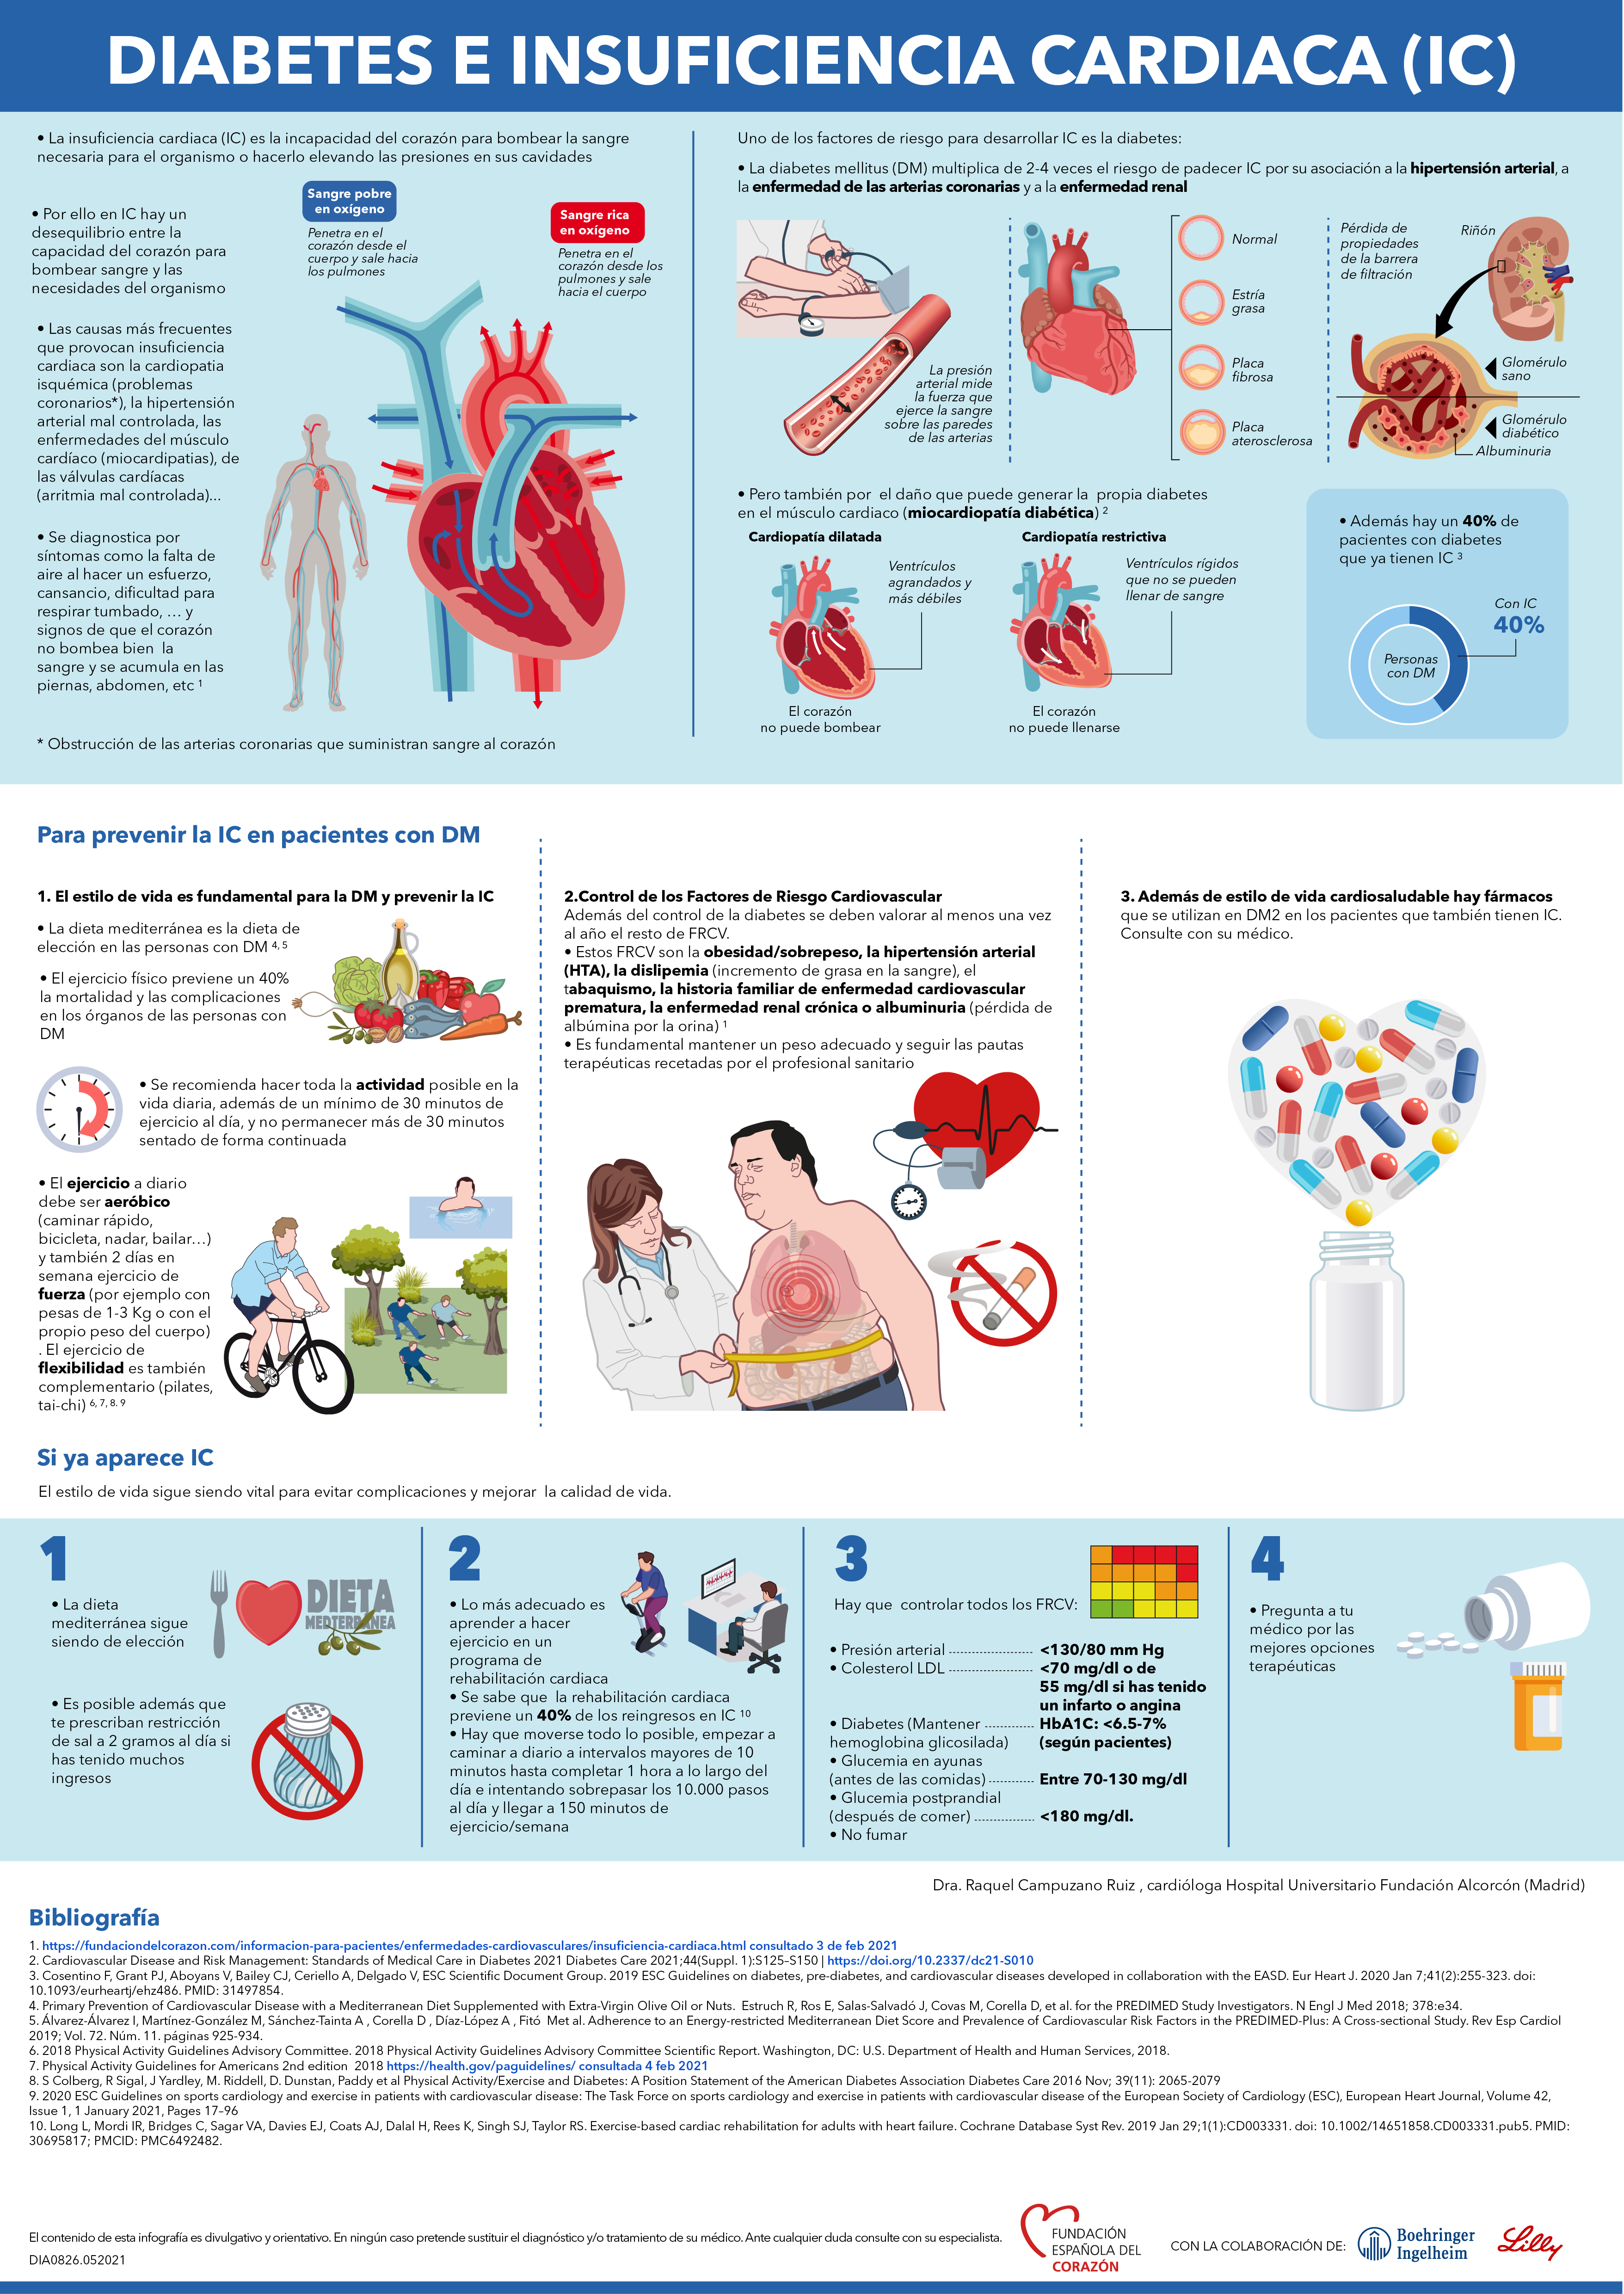 Diabetes e insuficiencia cardiaca